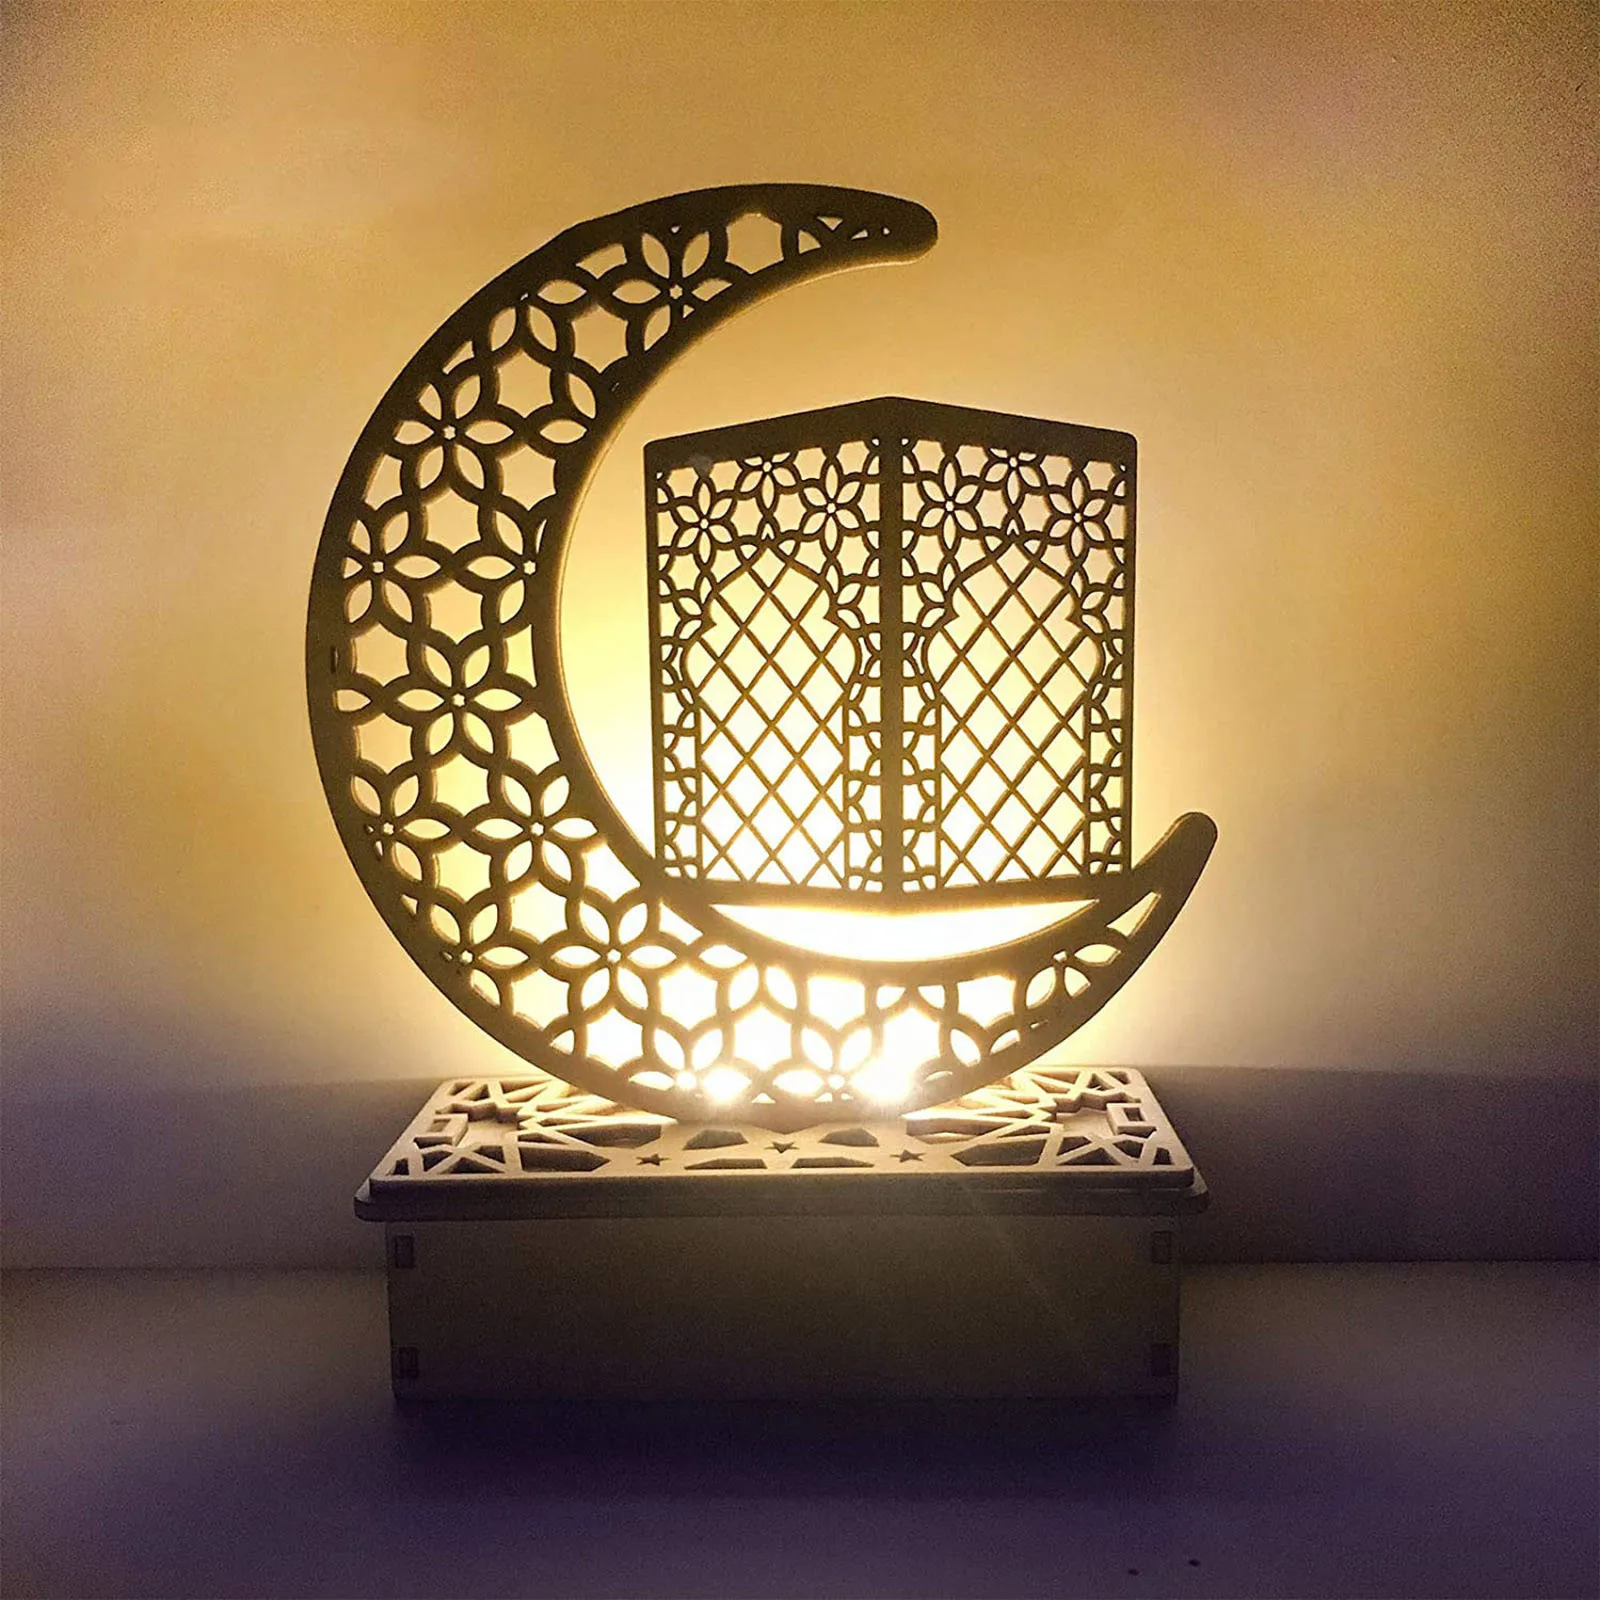 

EID Mubarak Wooden Ornament With LED Night Light Ramadan Decorations For Home Islamic Muslim Party Supplies Ramadan Desk Crafts